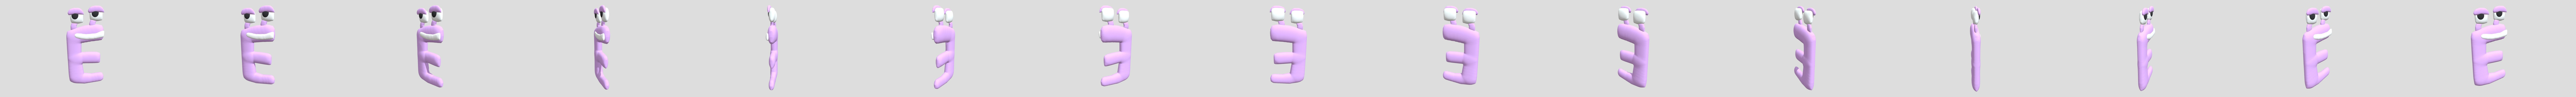 Alphabet Lore Z - 3D model by mjj04e on Thangs